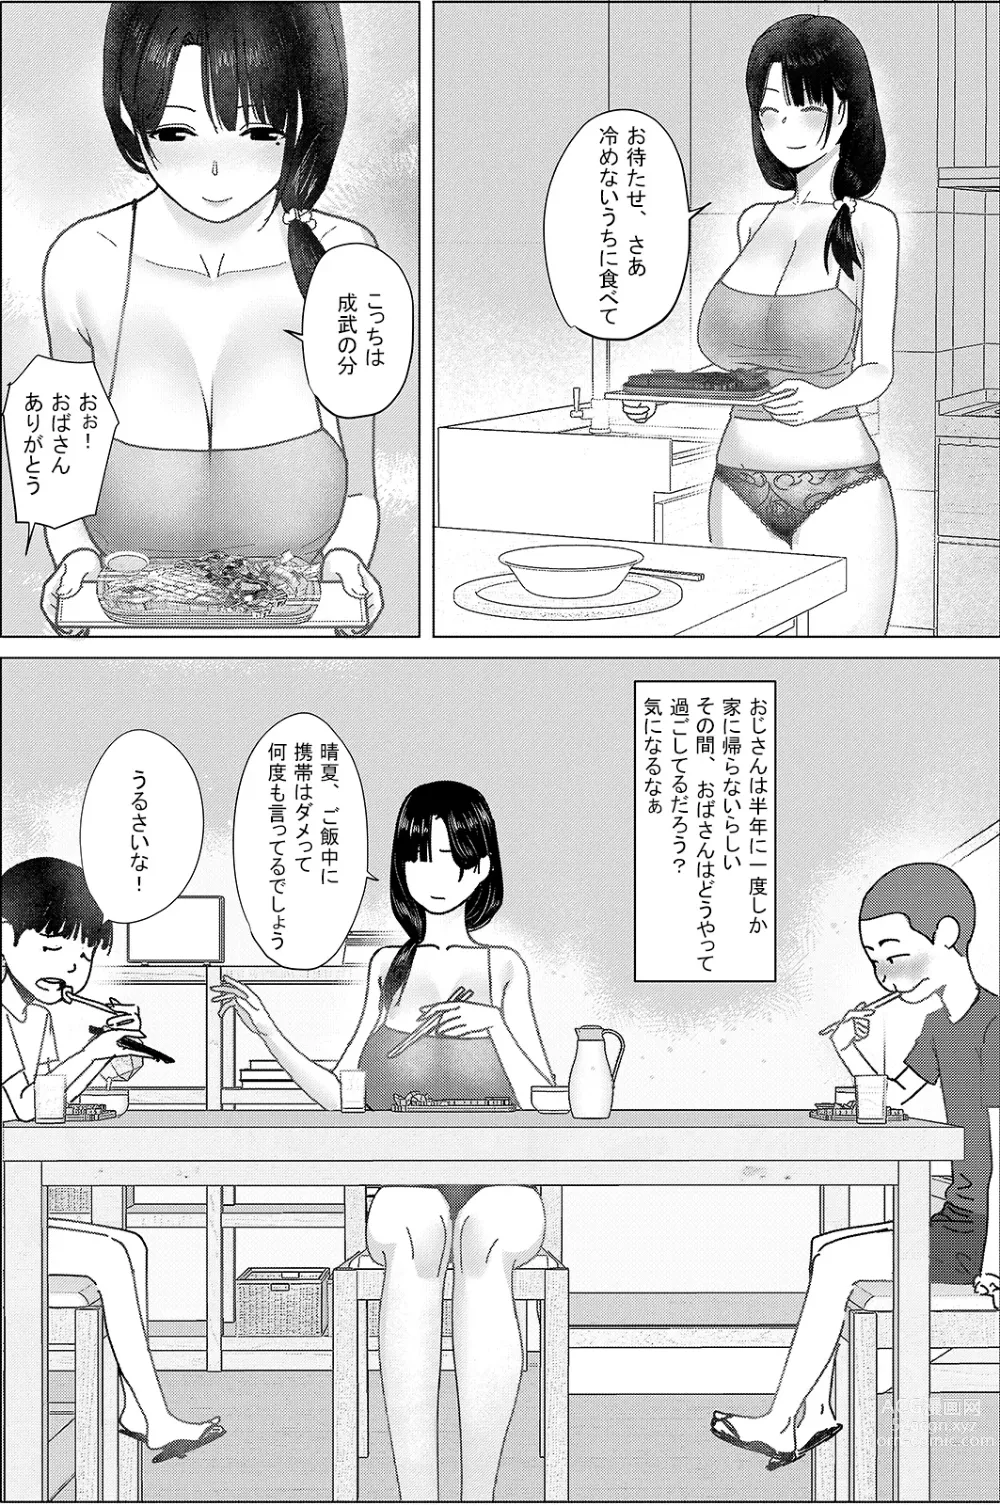 Page 6 of doujinshi Warugaki Series